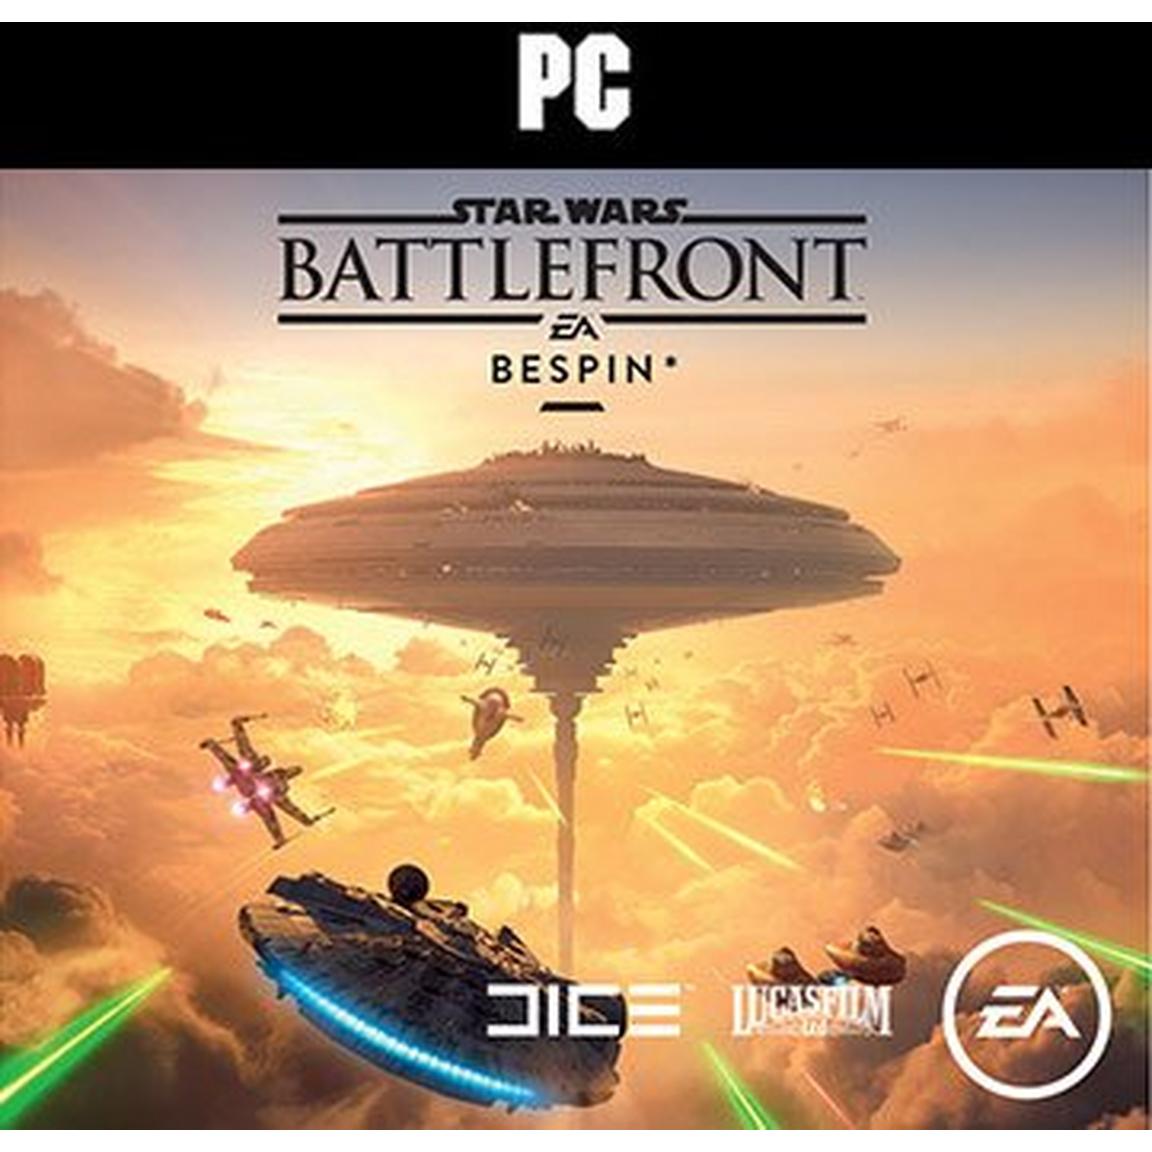 Star Wars Battlefront: Bespin DLC - PC EA app, Digital -  Electronic Arts, 2105177